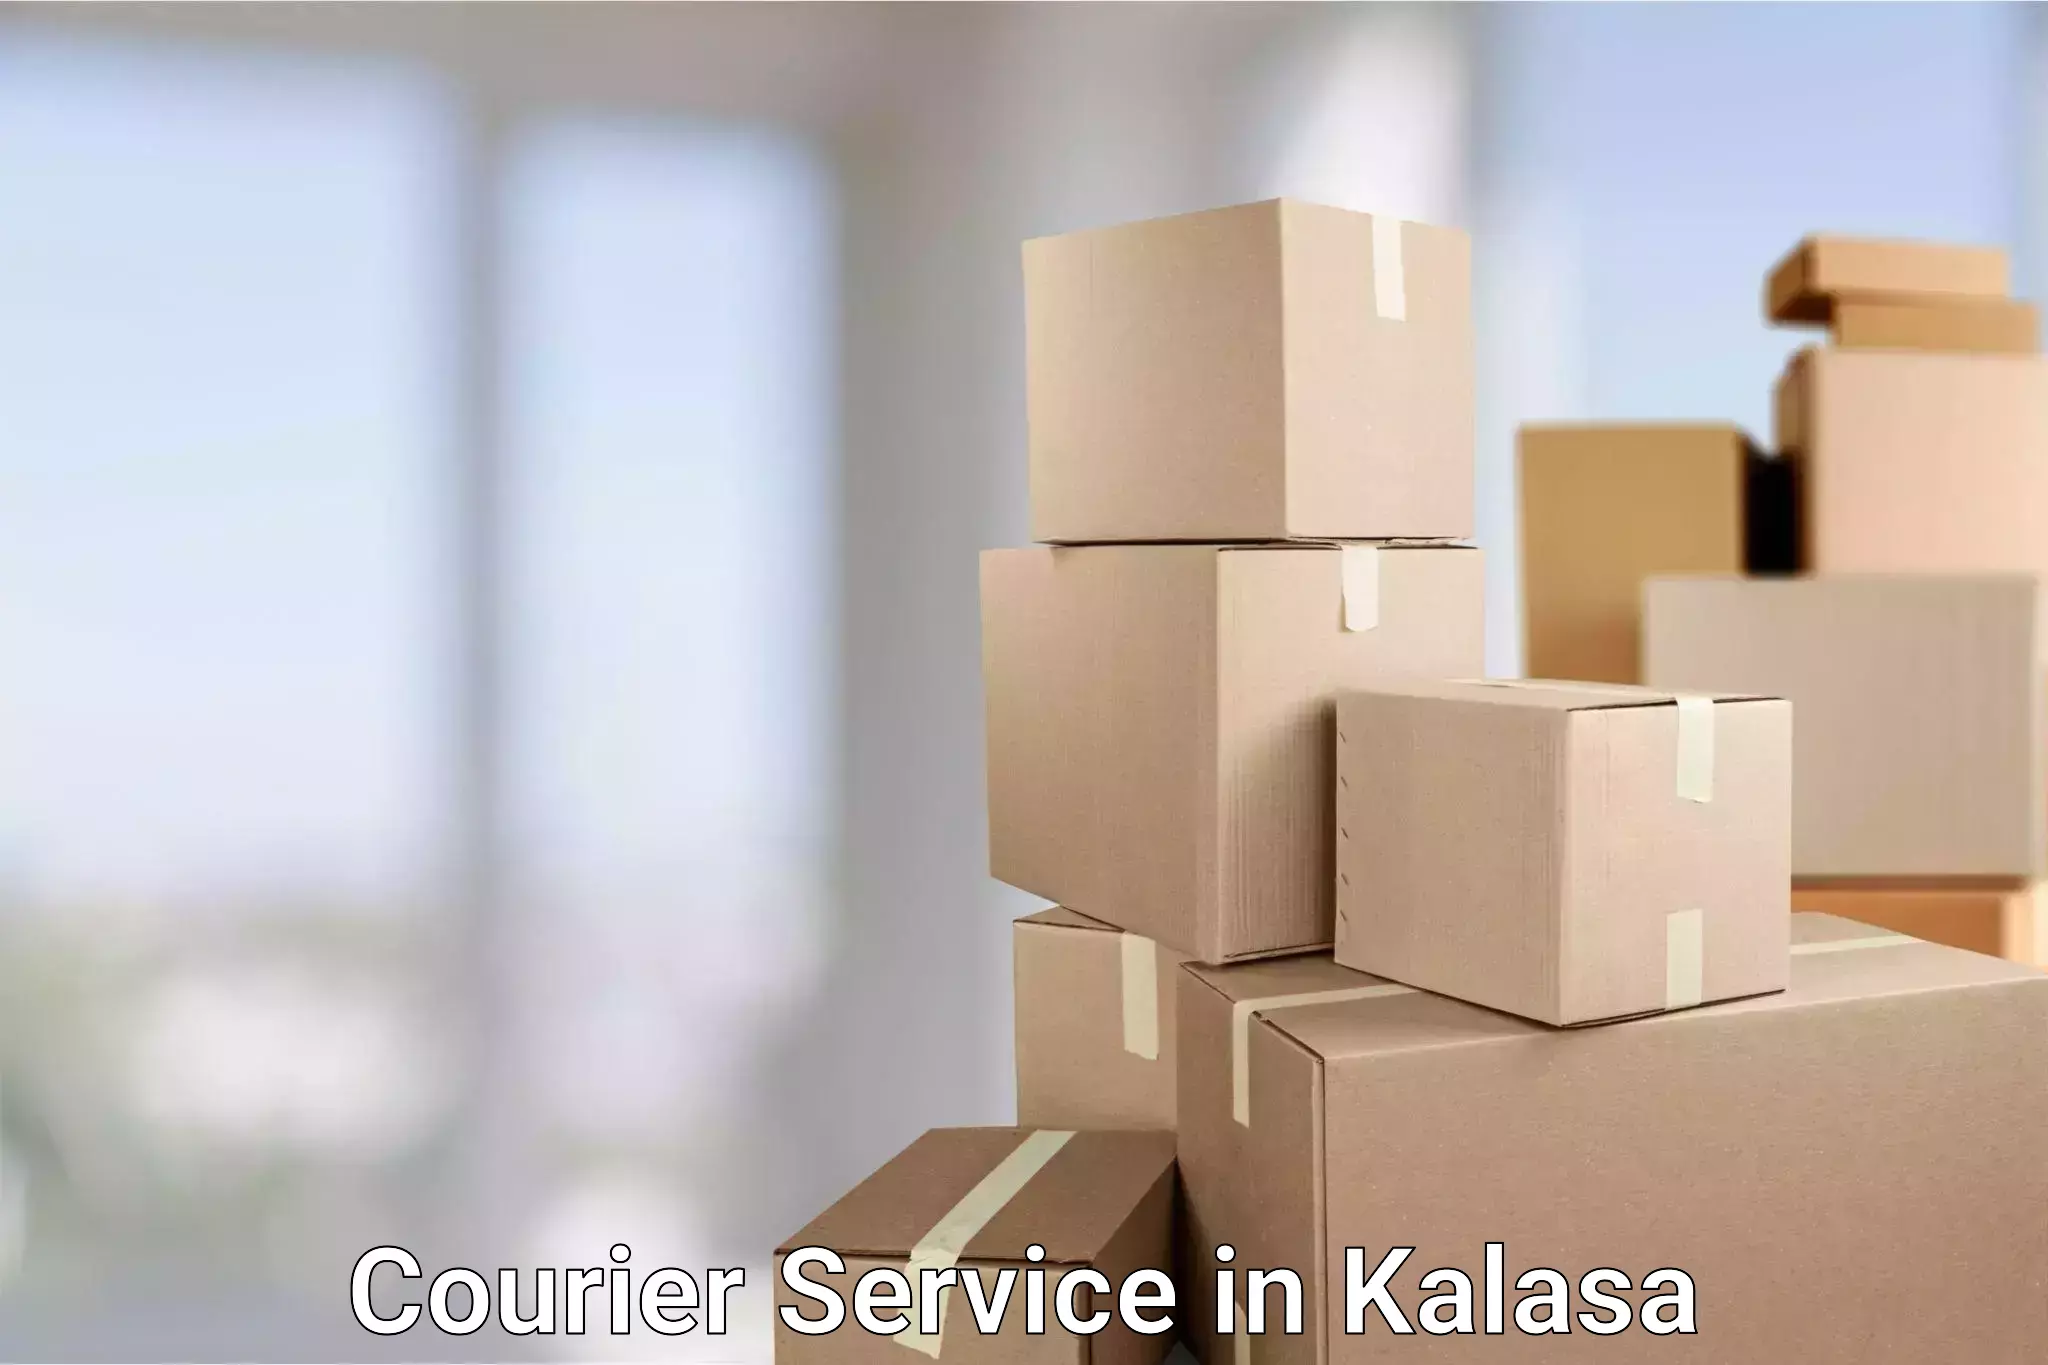 High-efficiency logistics in Kalasa